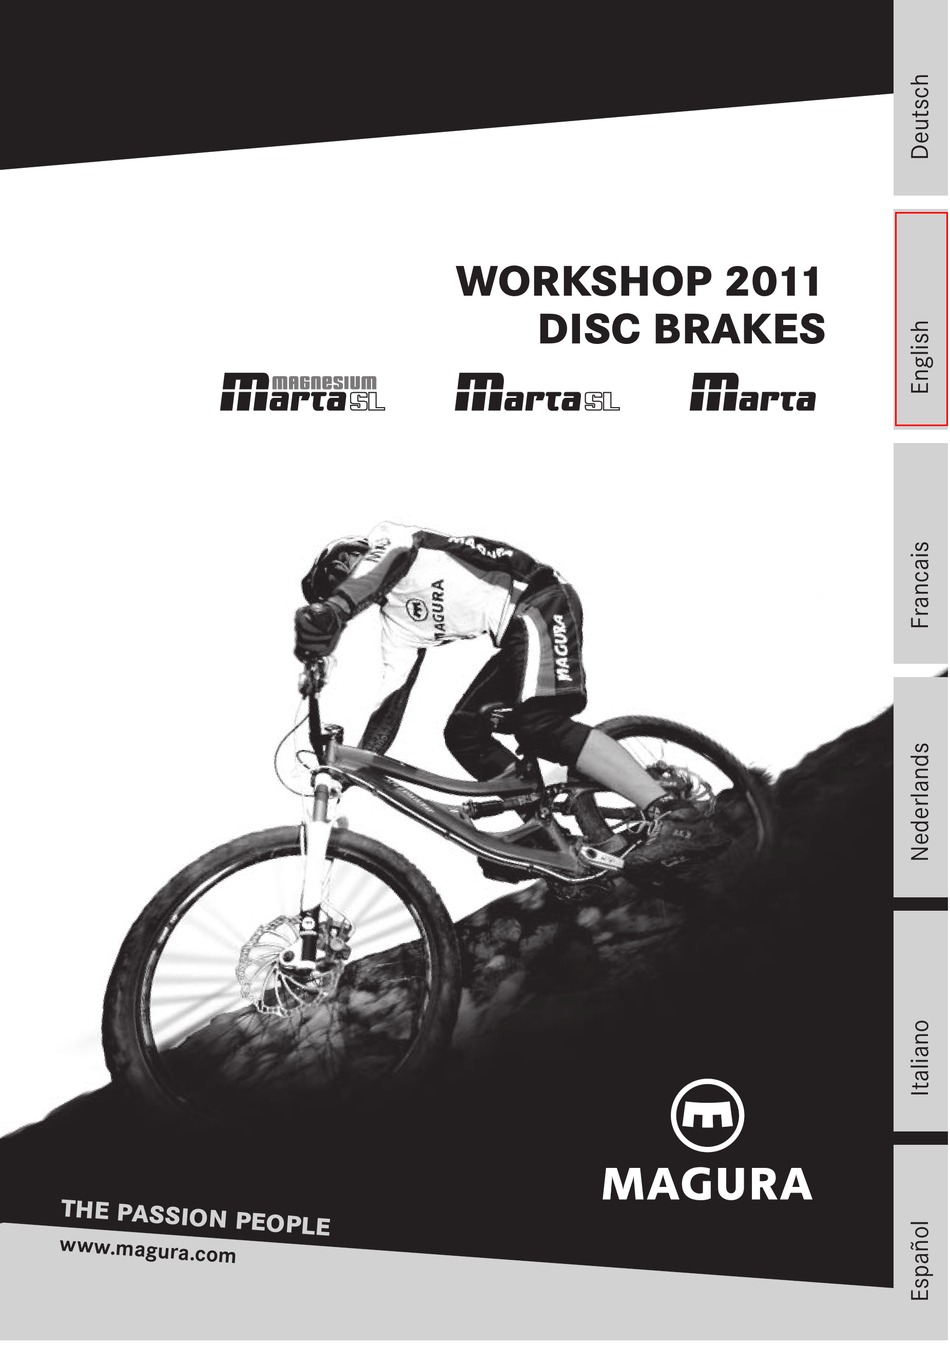 MAGURA MARTA SL MAGNESIUM SERIES WORKSHOP MANUAL Pdf Download | ManualsLib